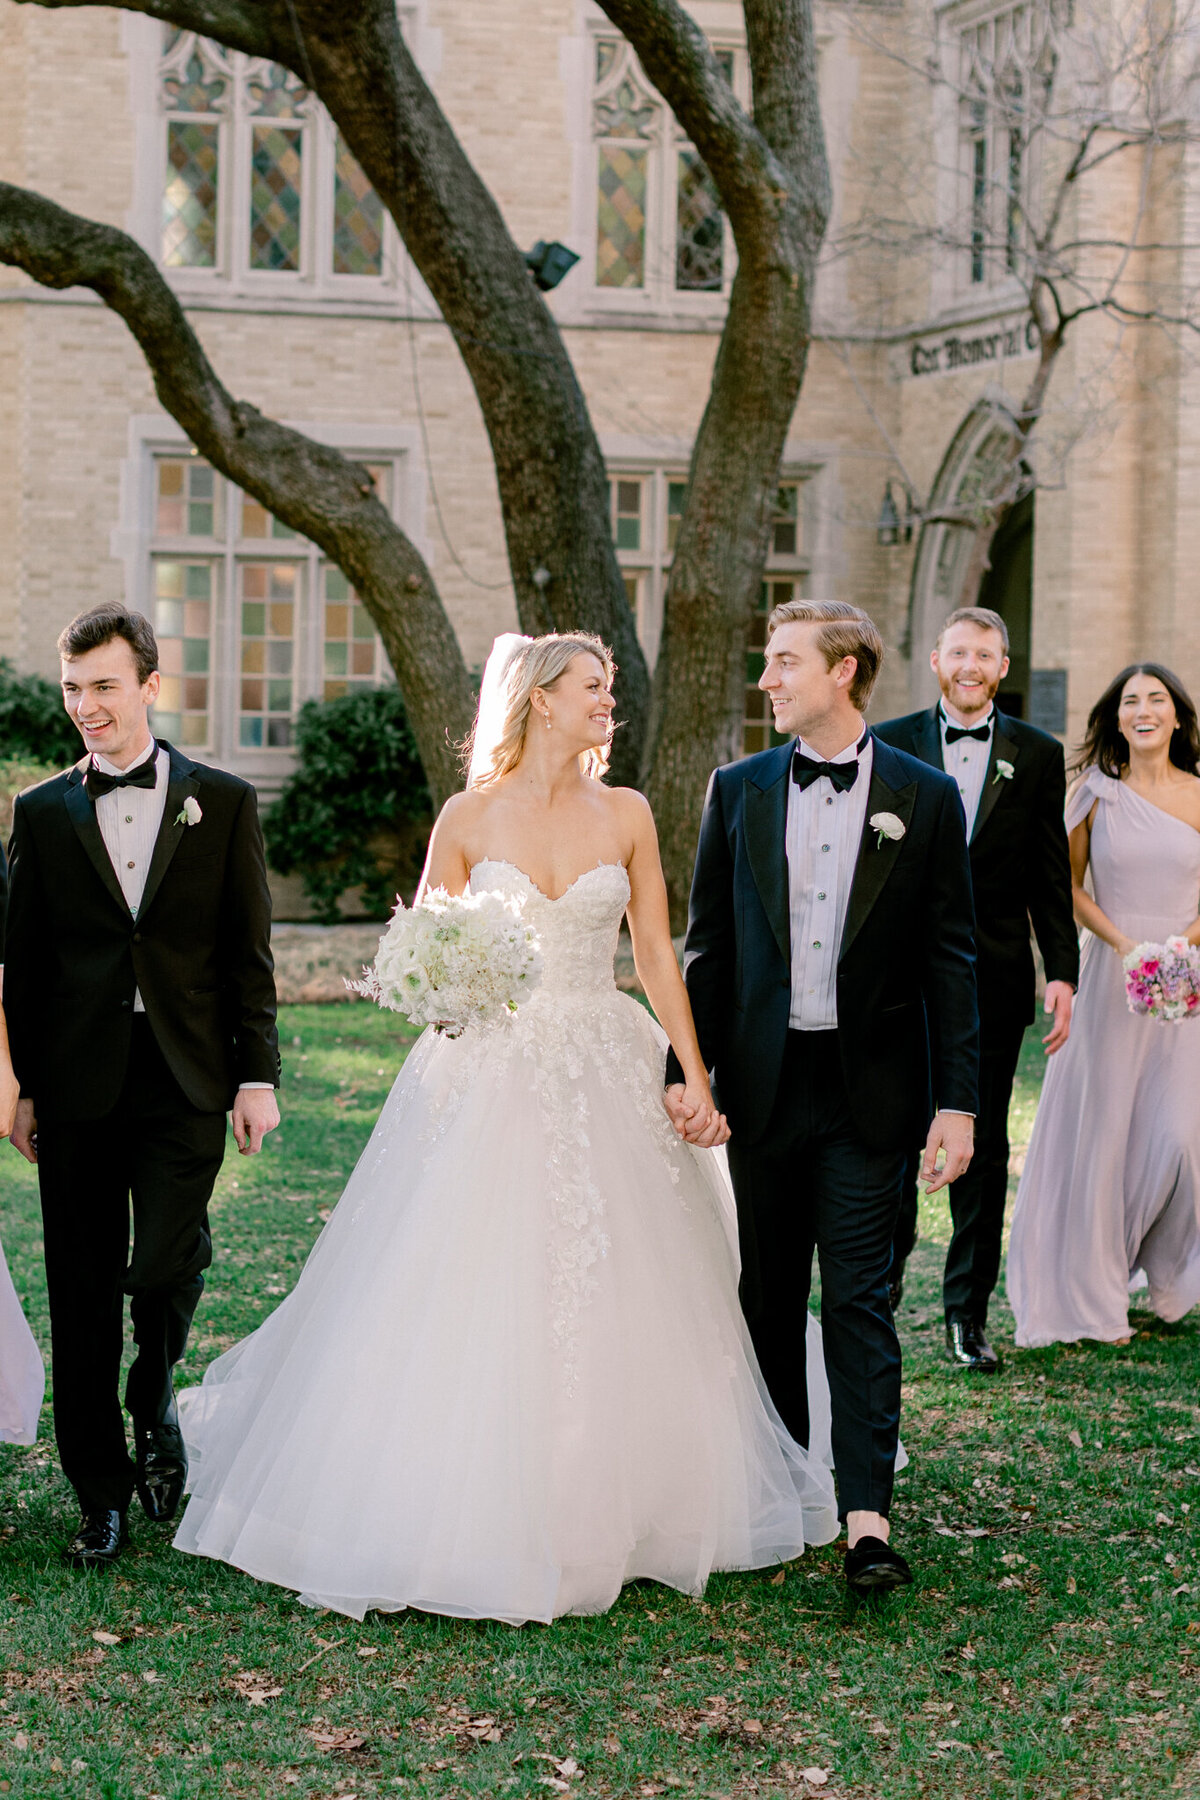 Shelby & Thomas's Wedding at HPUMC The Room on Main | Dallas Wedding Photographer | Sami Kathryn Photography-145